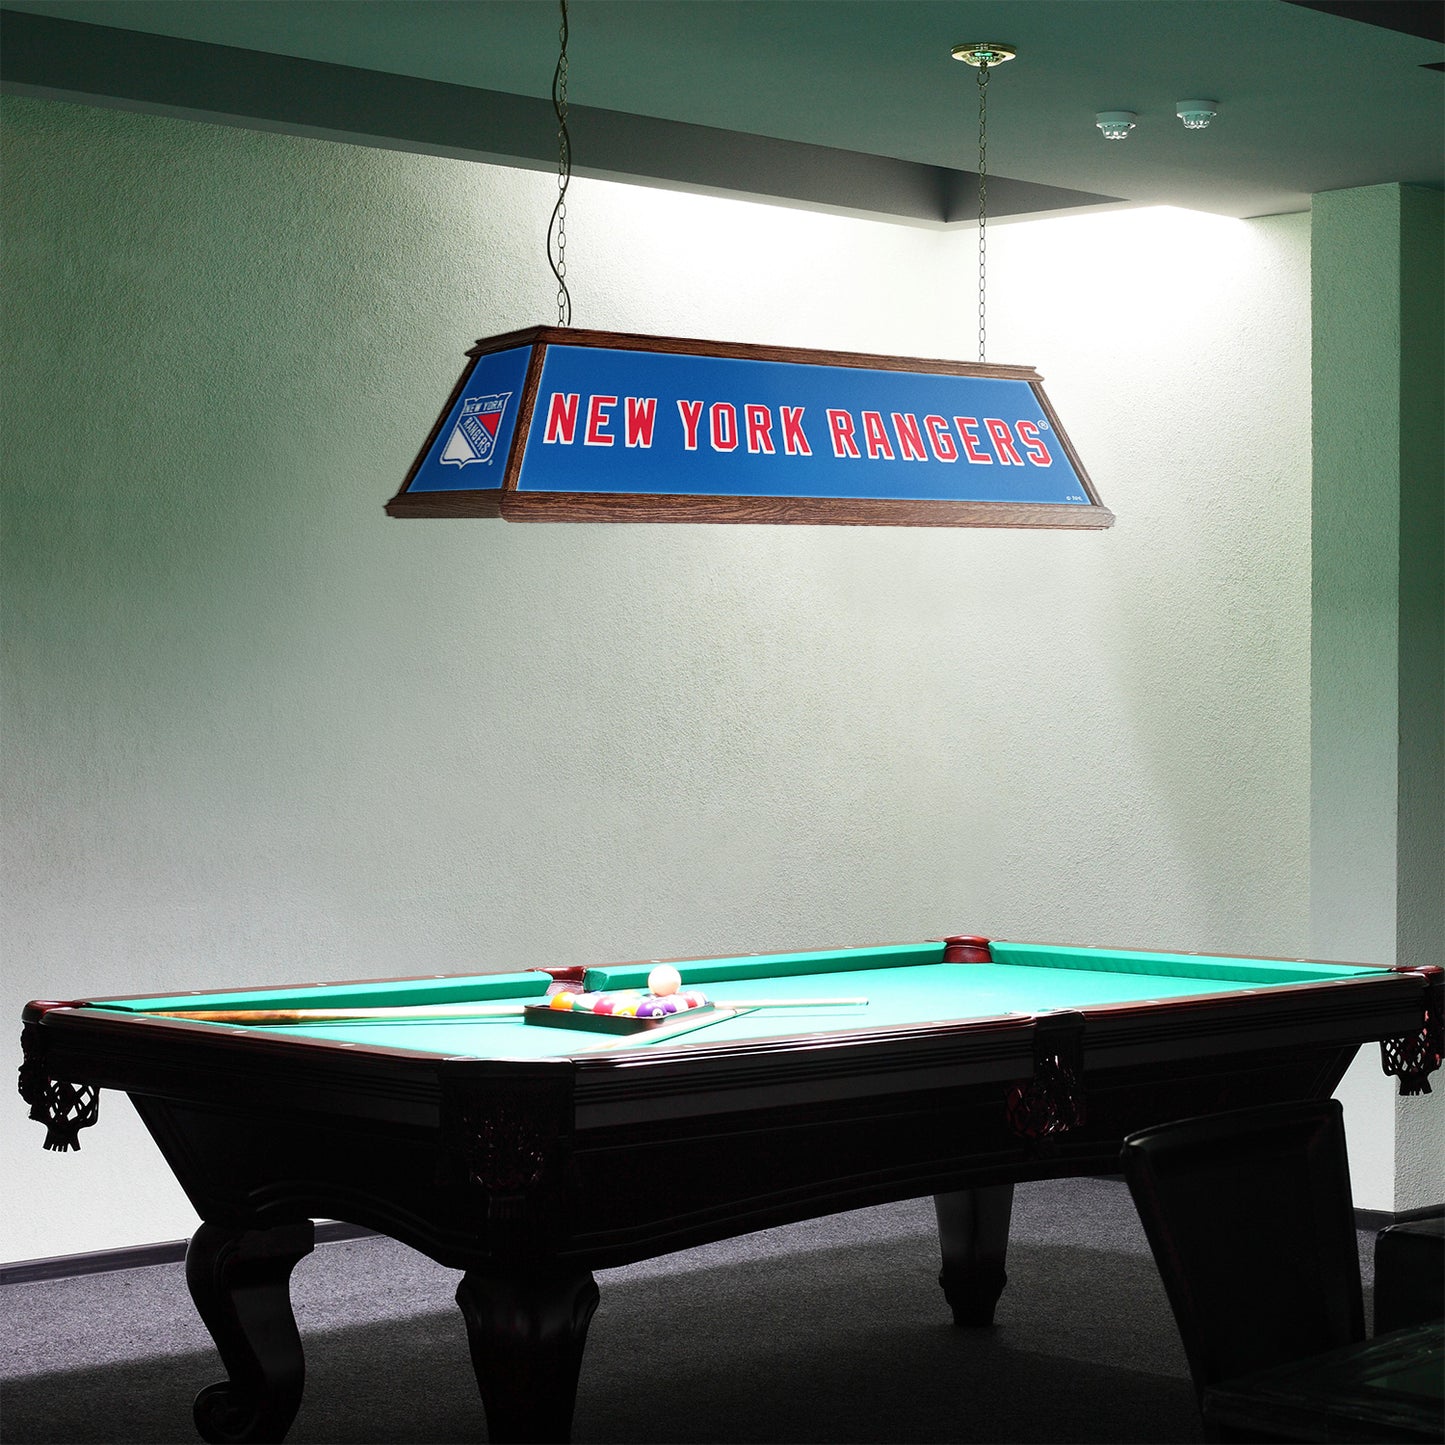 New York Rangers Premium Pool Table Light Room View